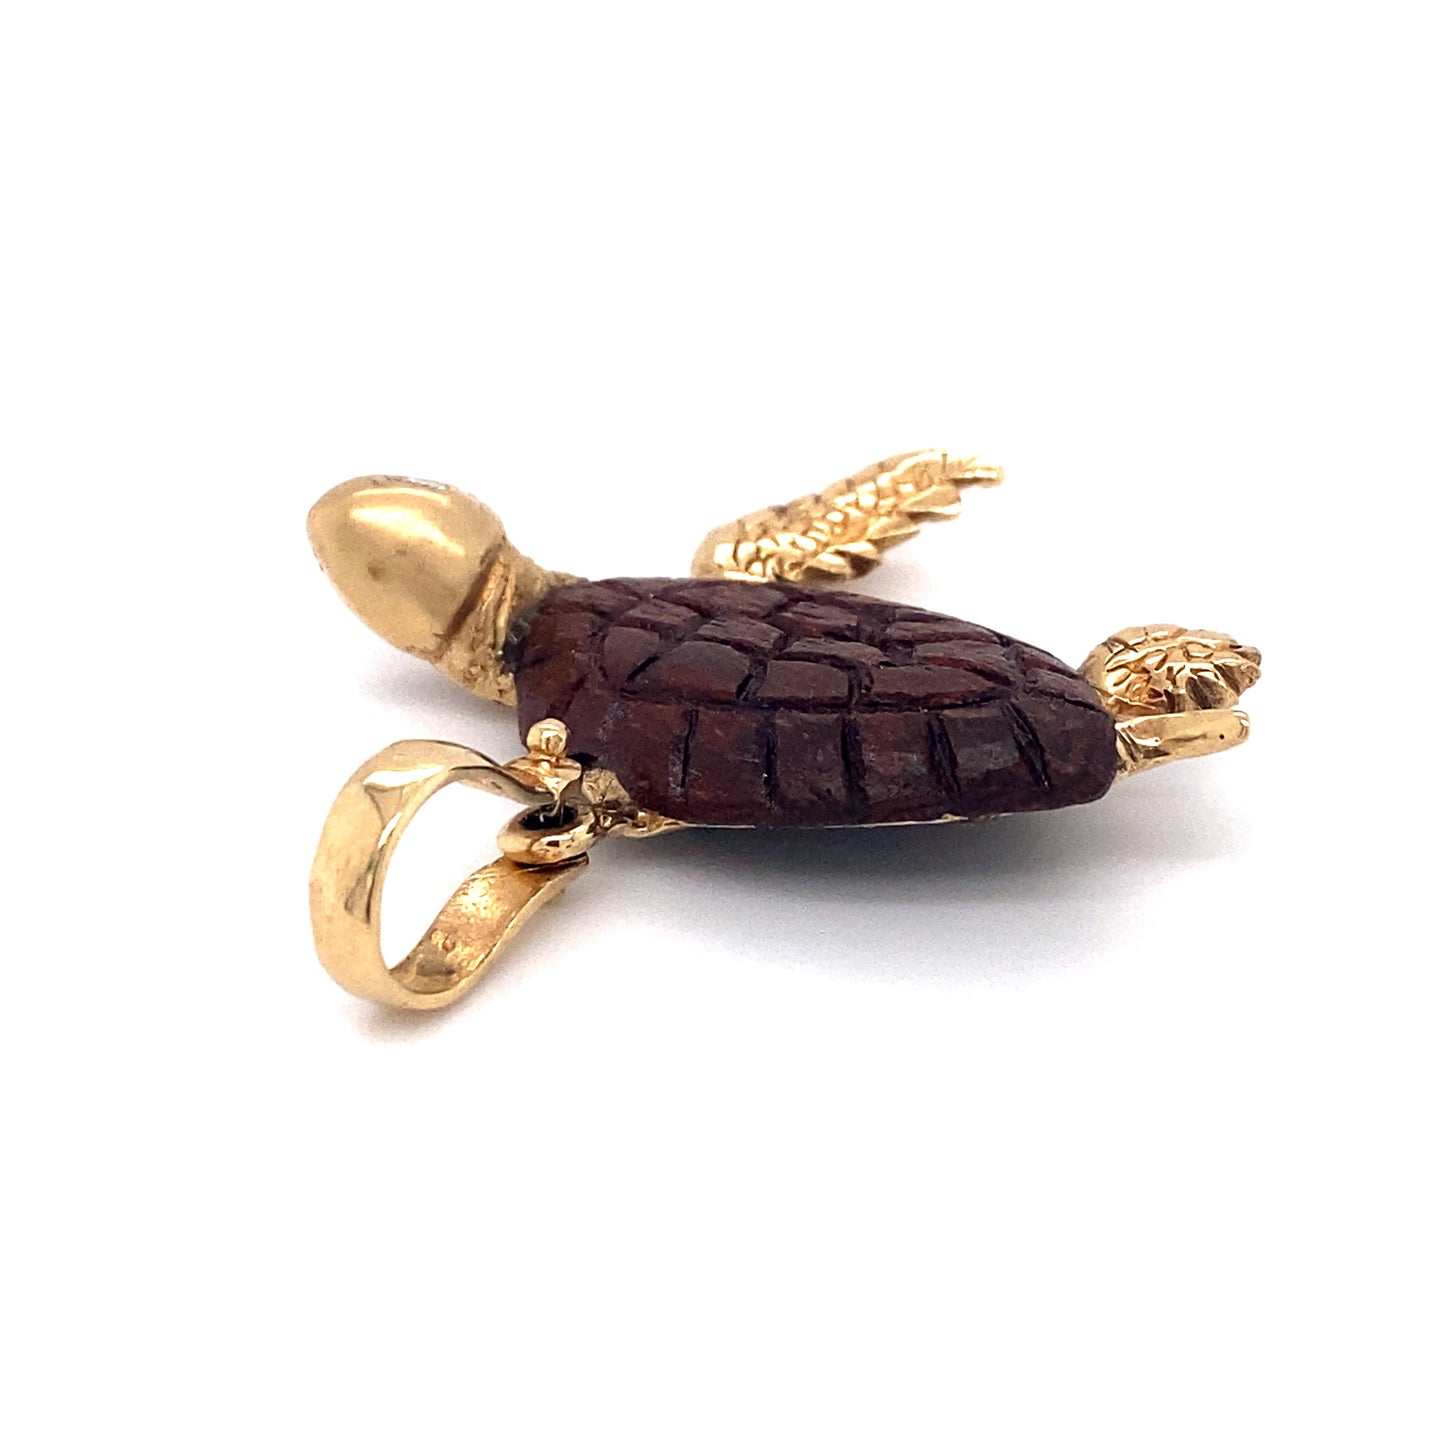 Circa 1990s Reclaimed Wood Sea Turtle Pendant with Diamond Eye in 14K Gold